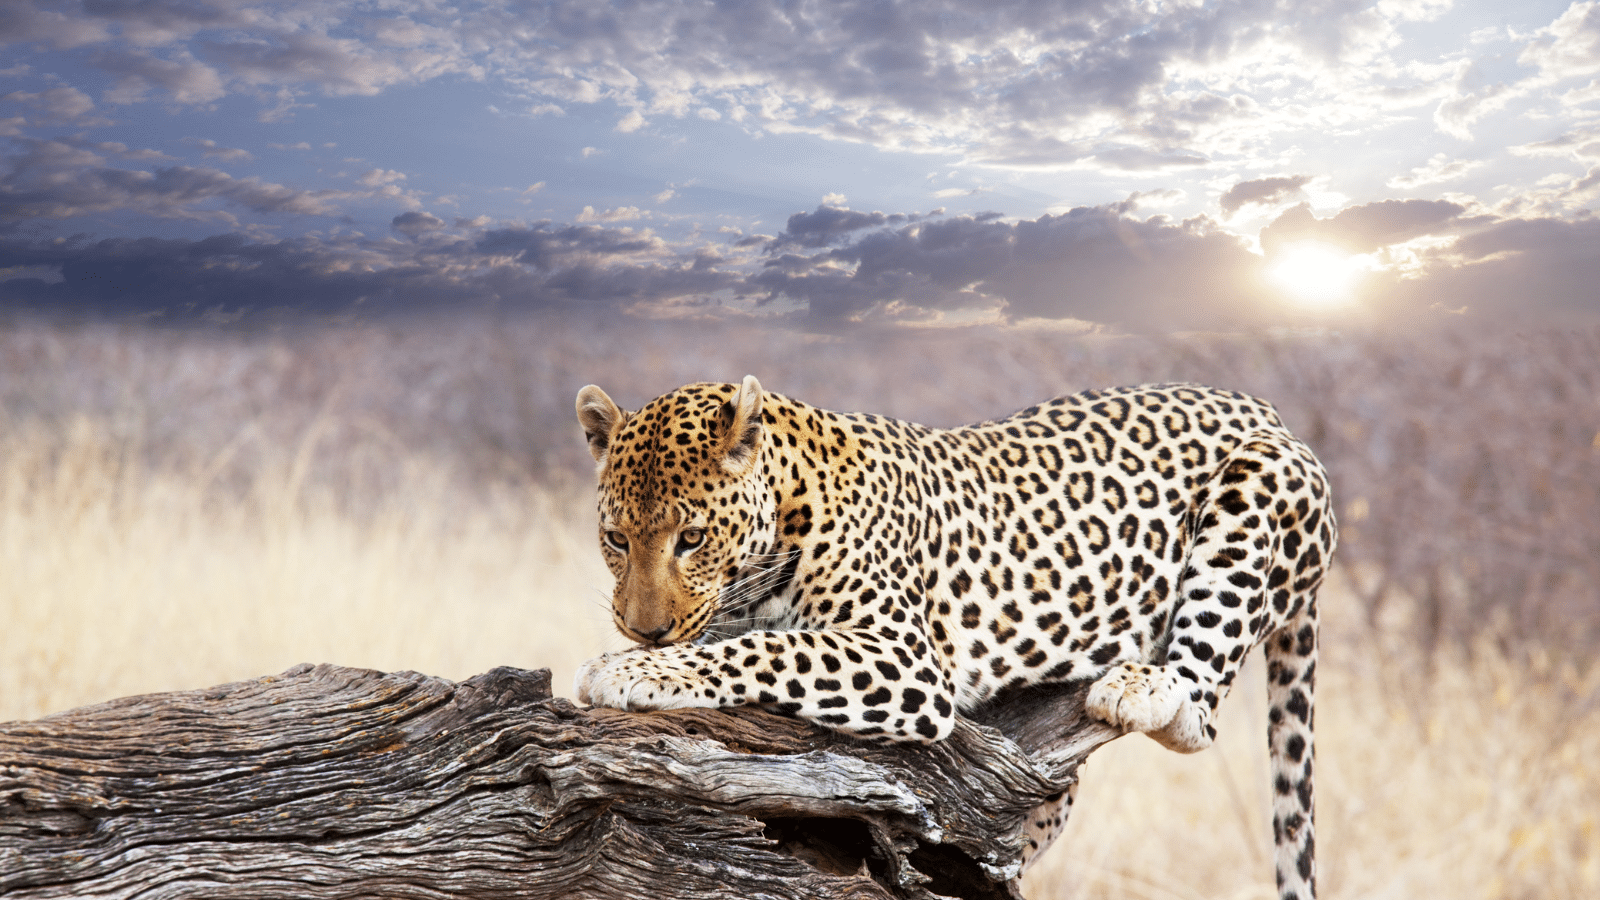 Leopard on a dead tree in the savannah.